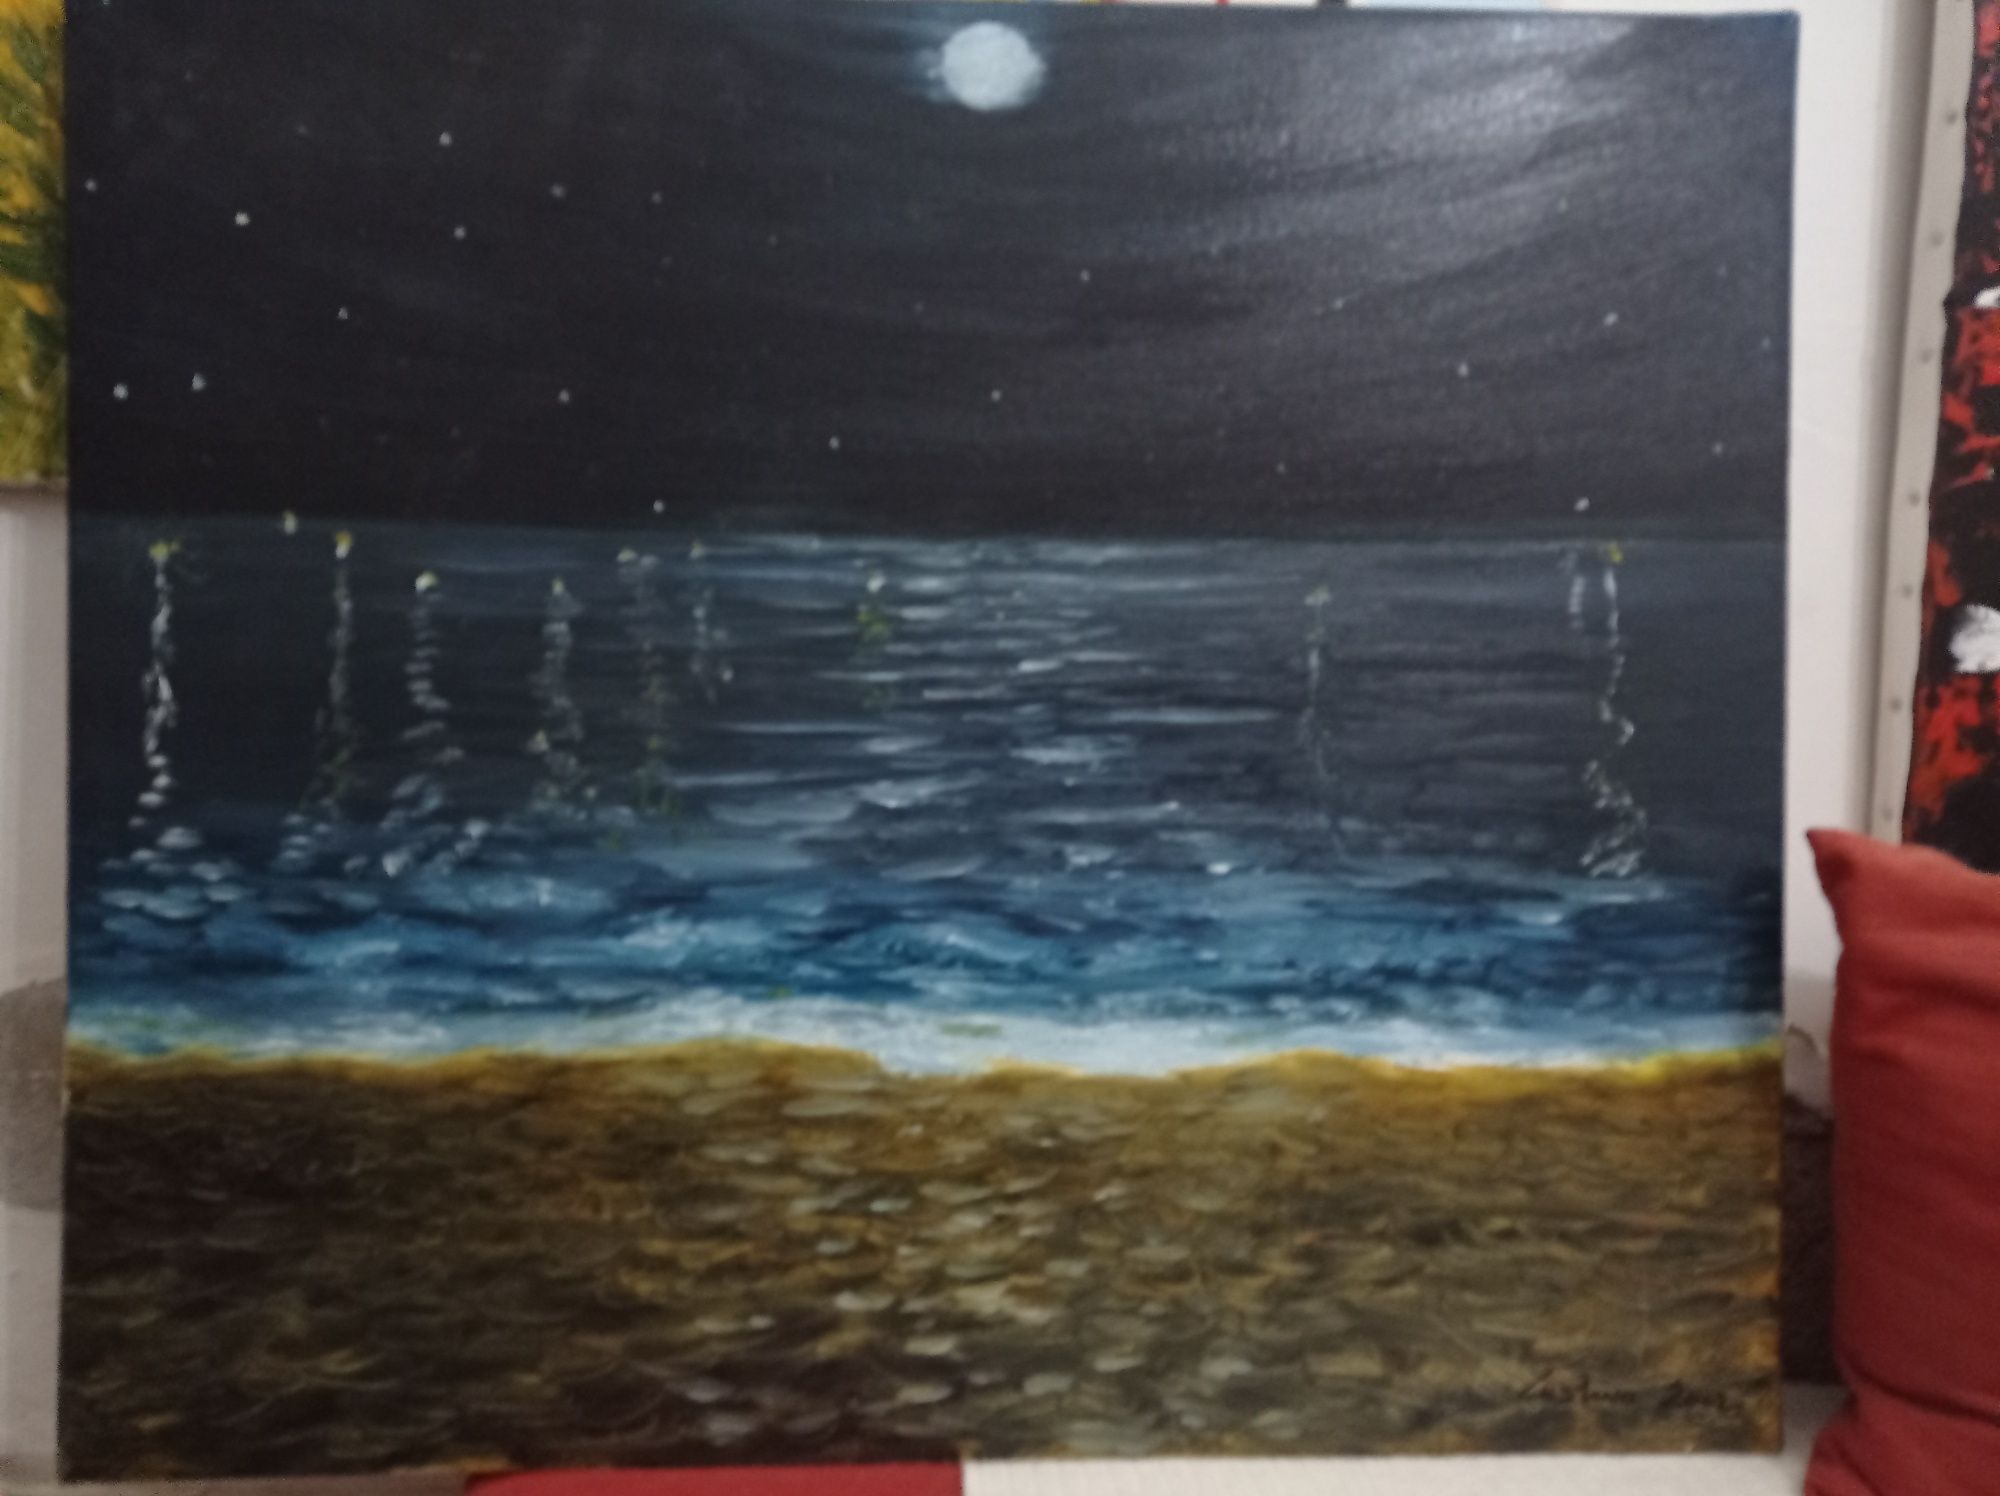 Pintura de Gustavo Moreira - "Nocturno"